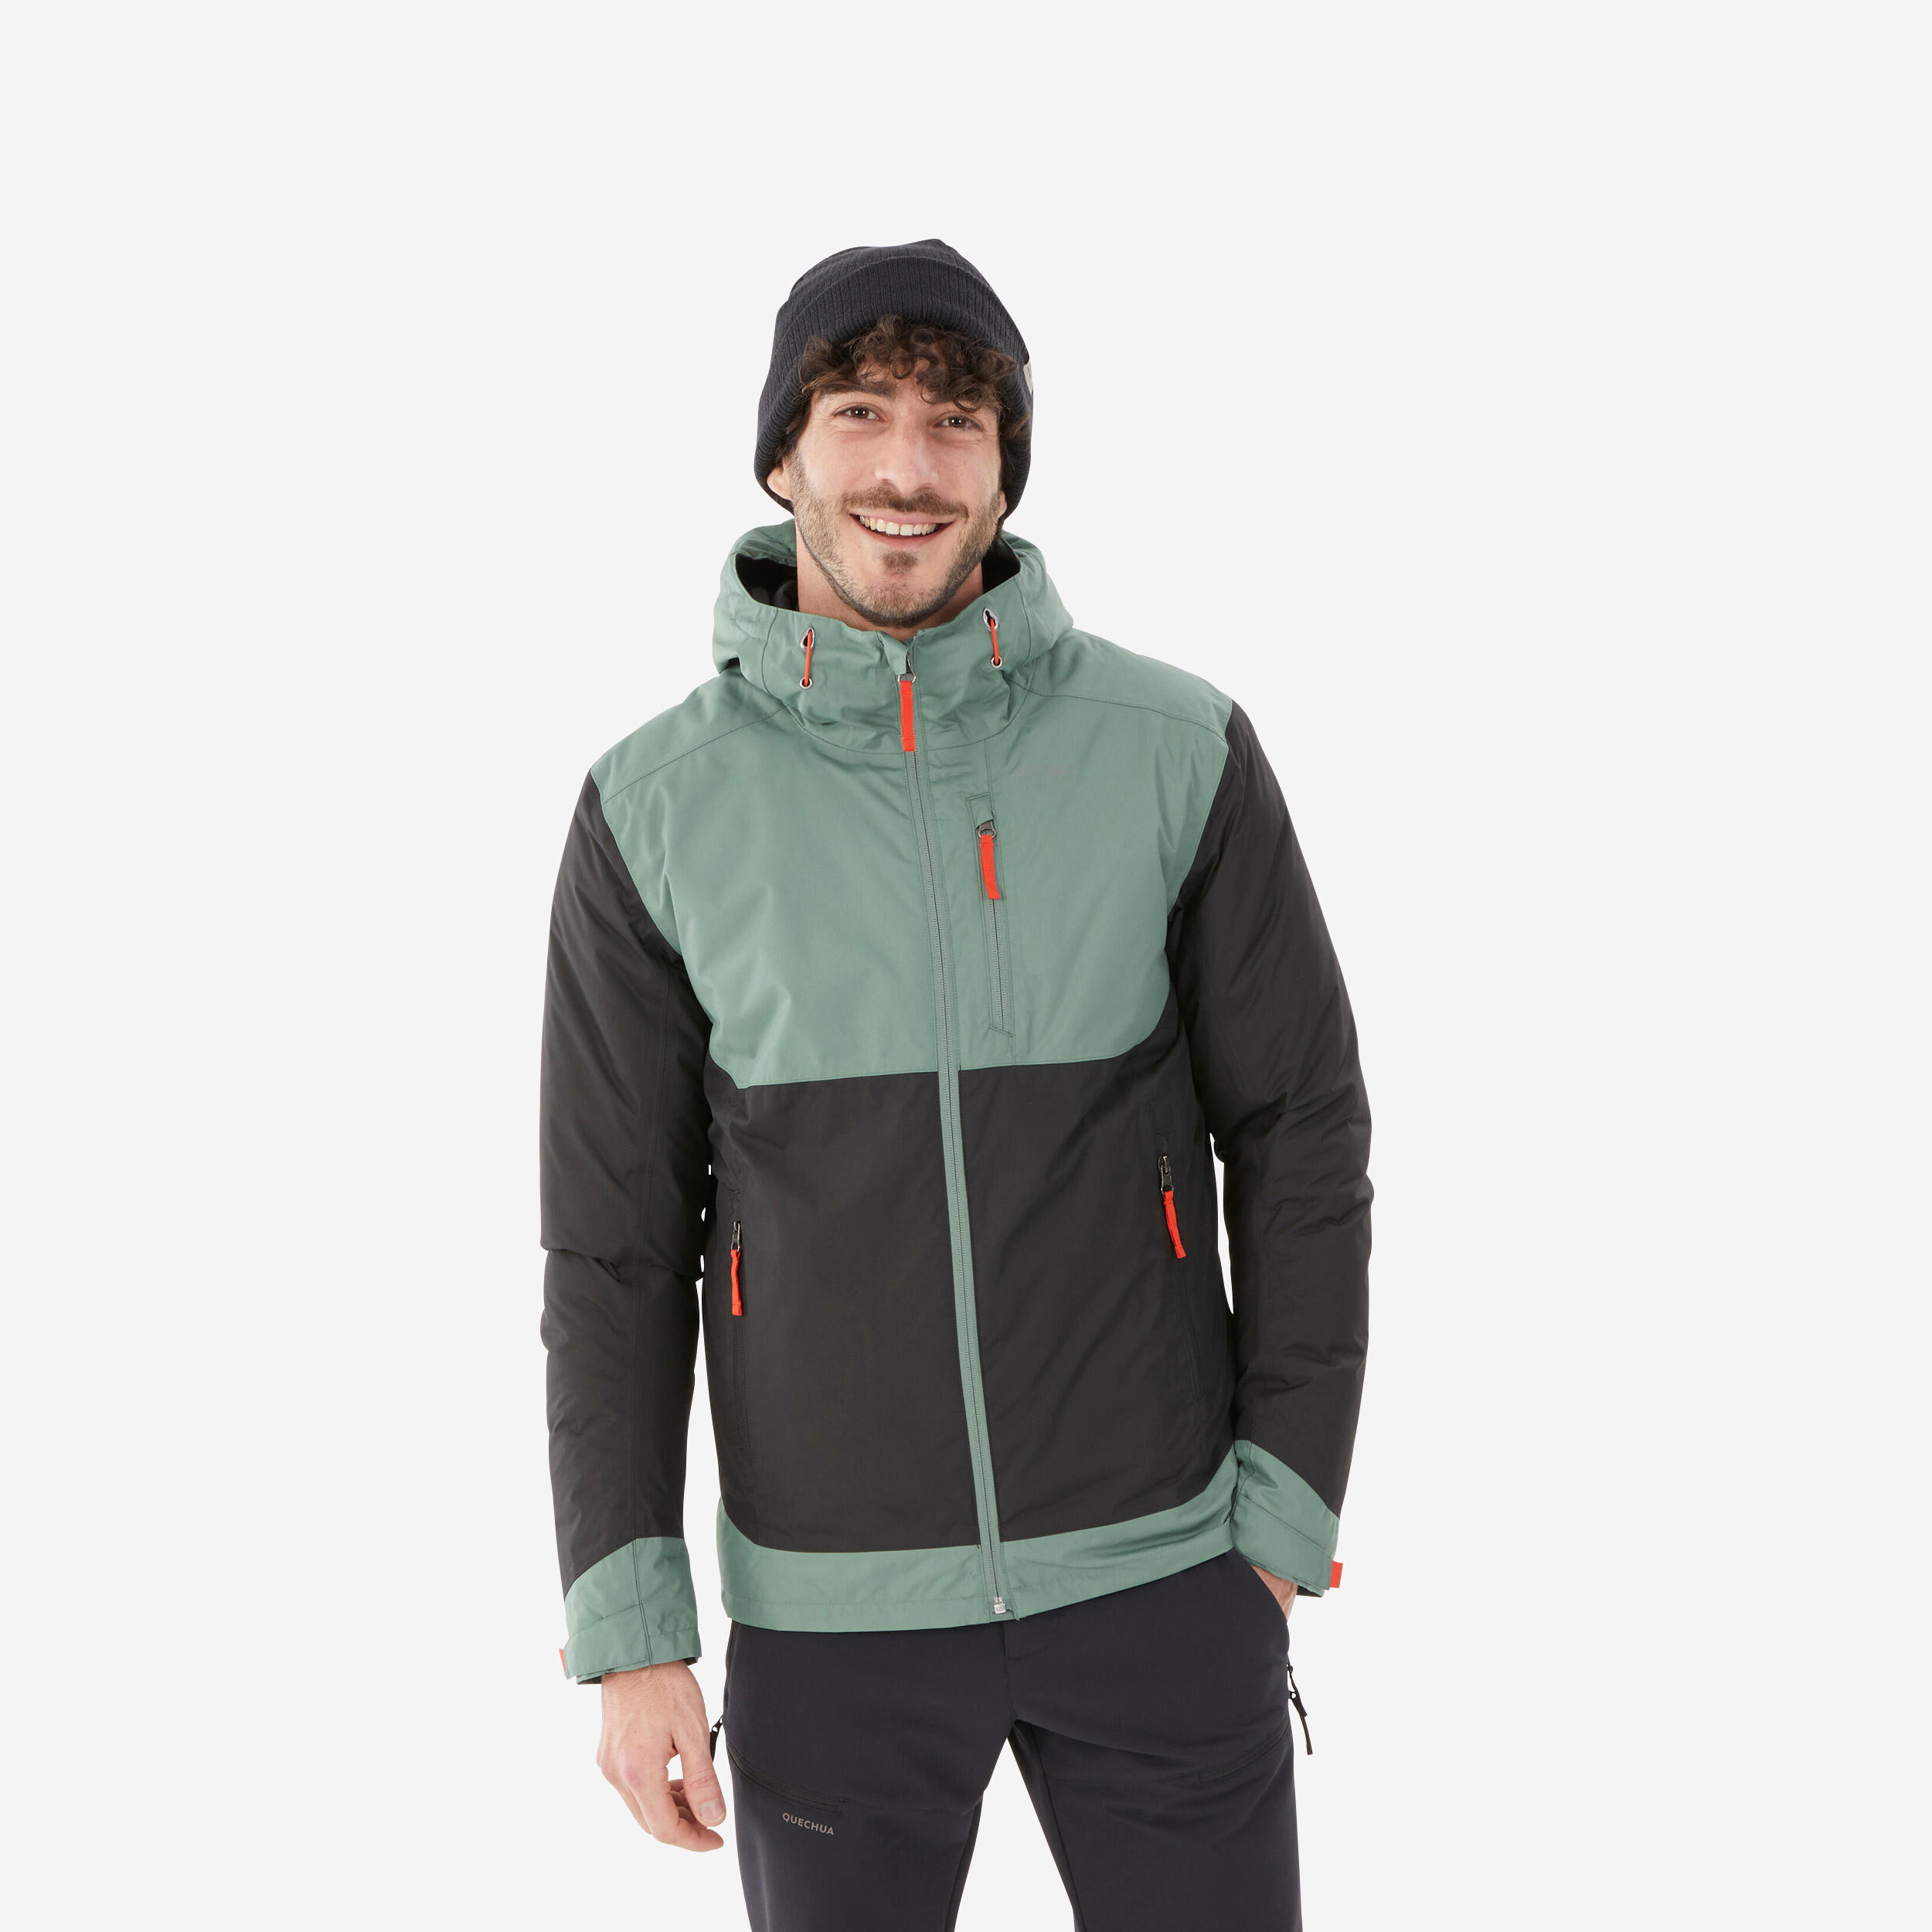 Men’s hiking waterproof winter jacket - SH500 -10°C 1/10